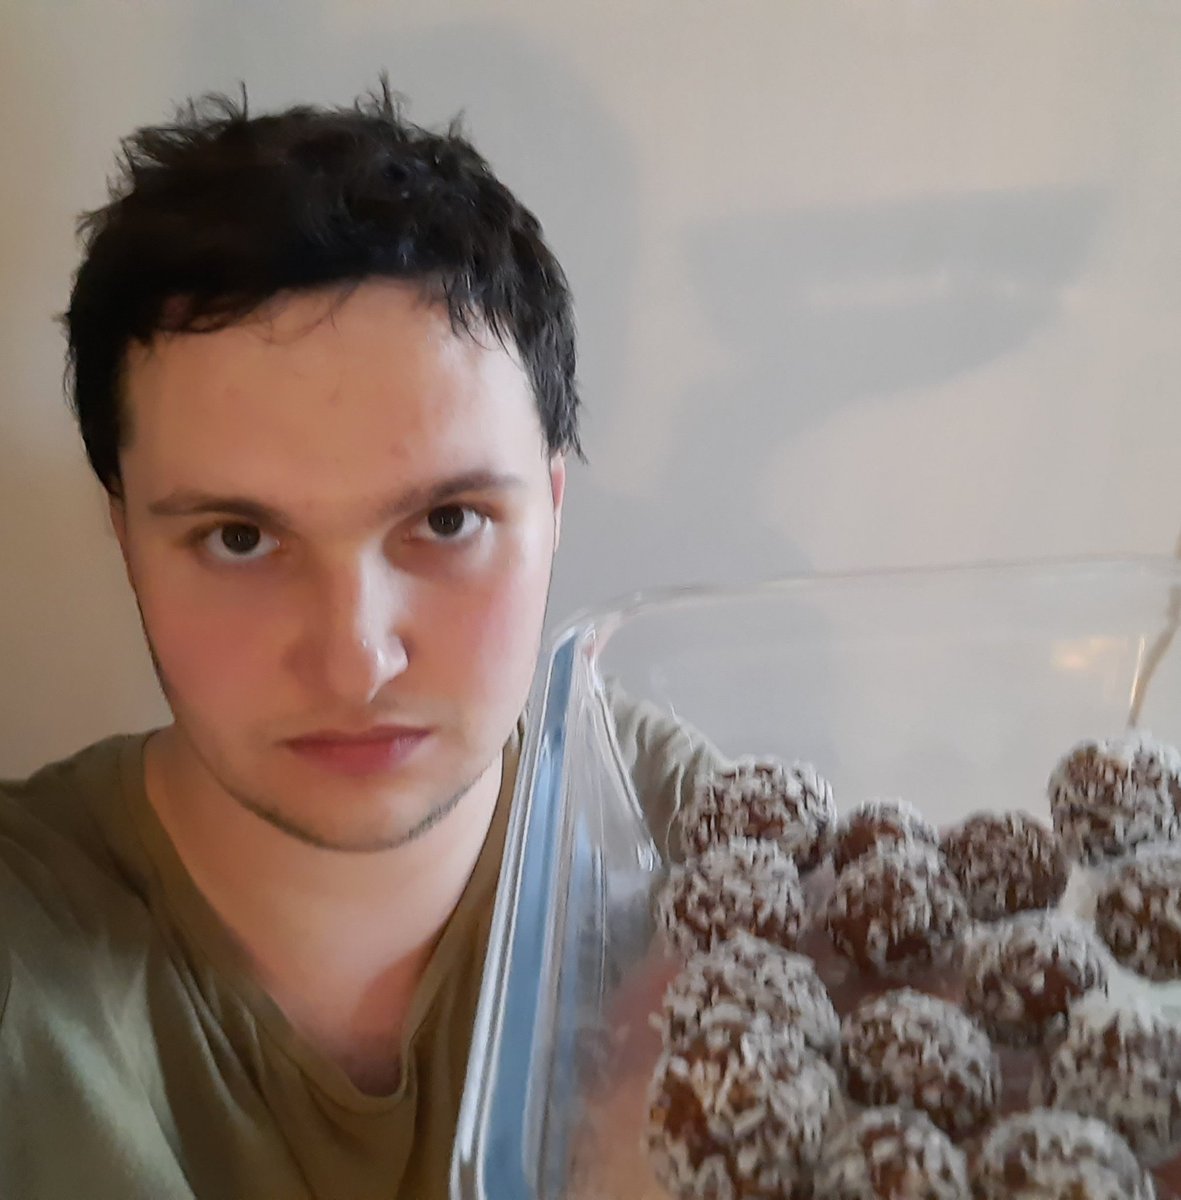 Today it's the #chocolateballday. And I have made #chocolateballs

#chokladbollar #czekoladowekulki #chokladbollensdag #dzieńczekoladowejkulki #chocolate #choklad #czekolada #sweden #sverige #szwecja #skåne #wednesday #onsdag #środa #may #maj #spring #vår #wiosna